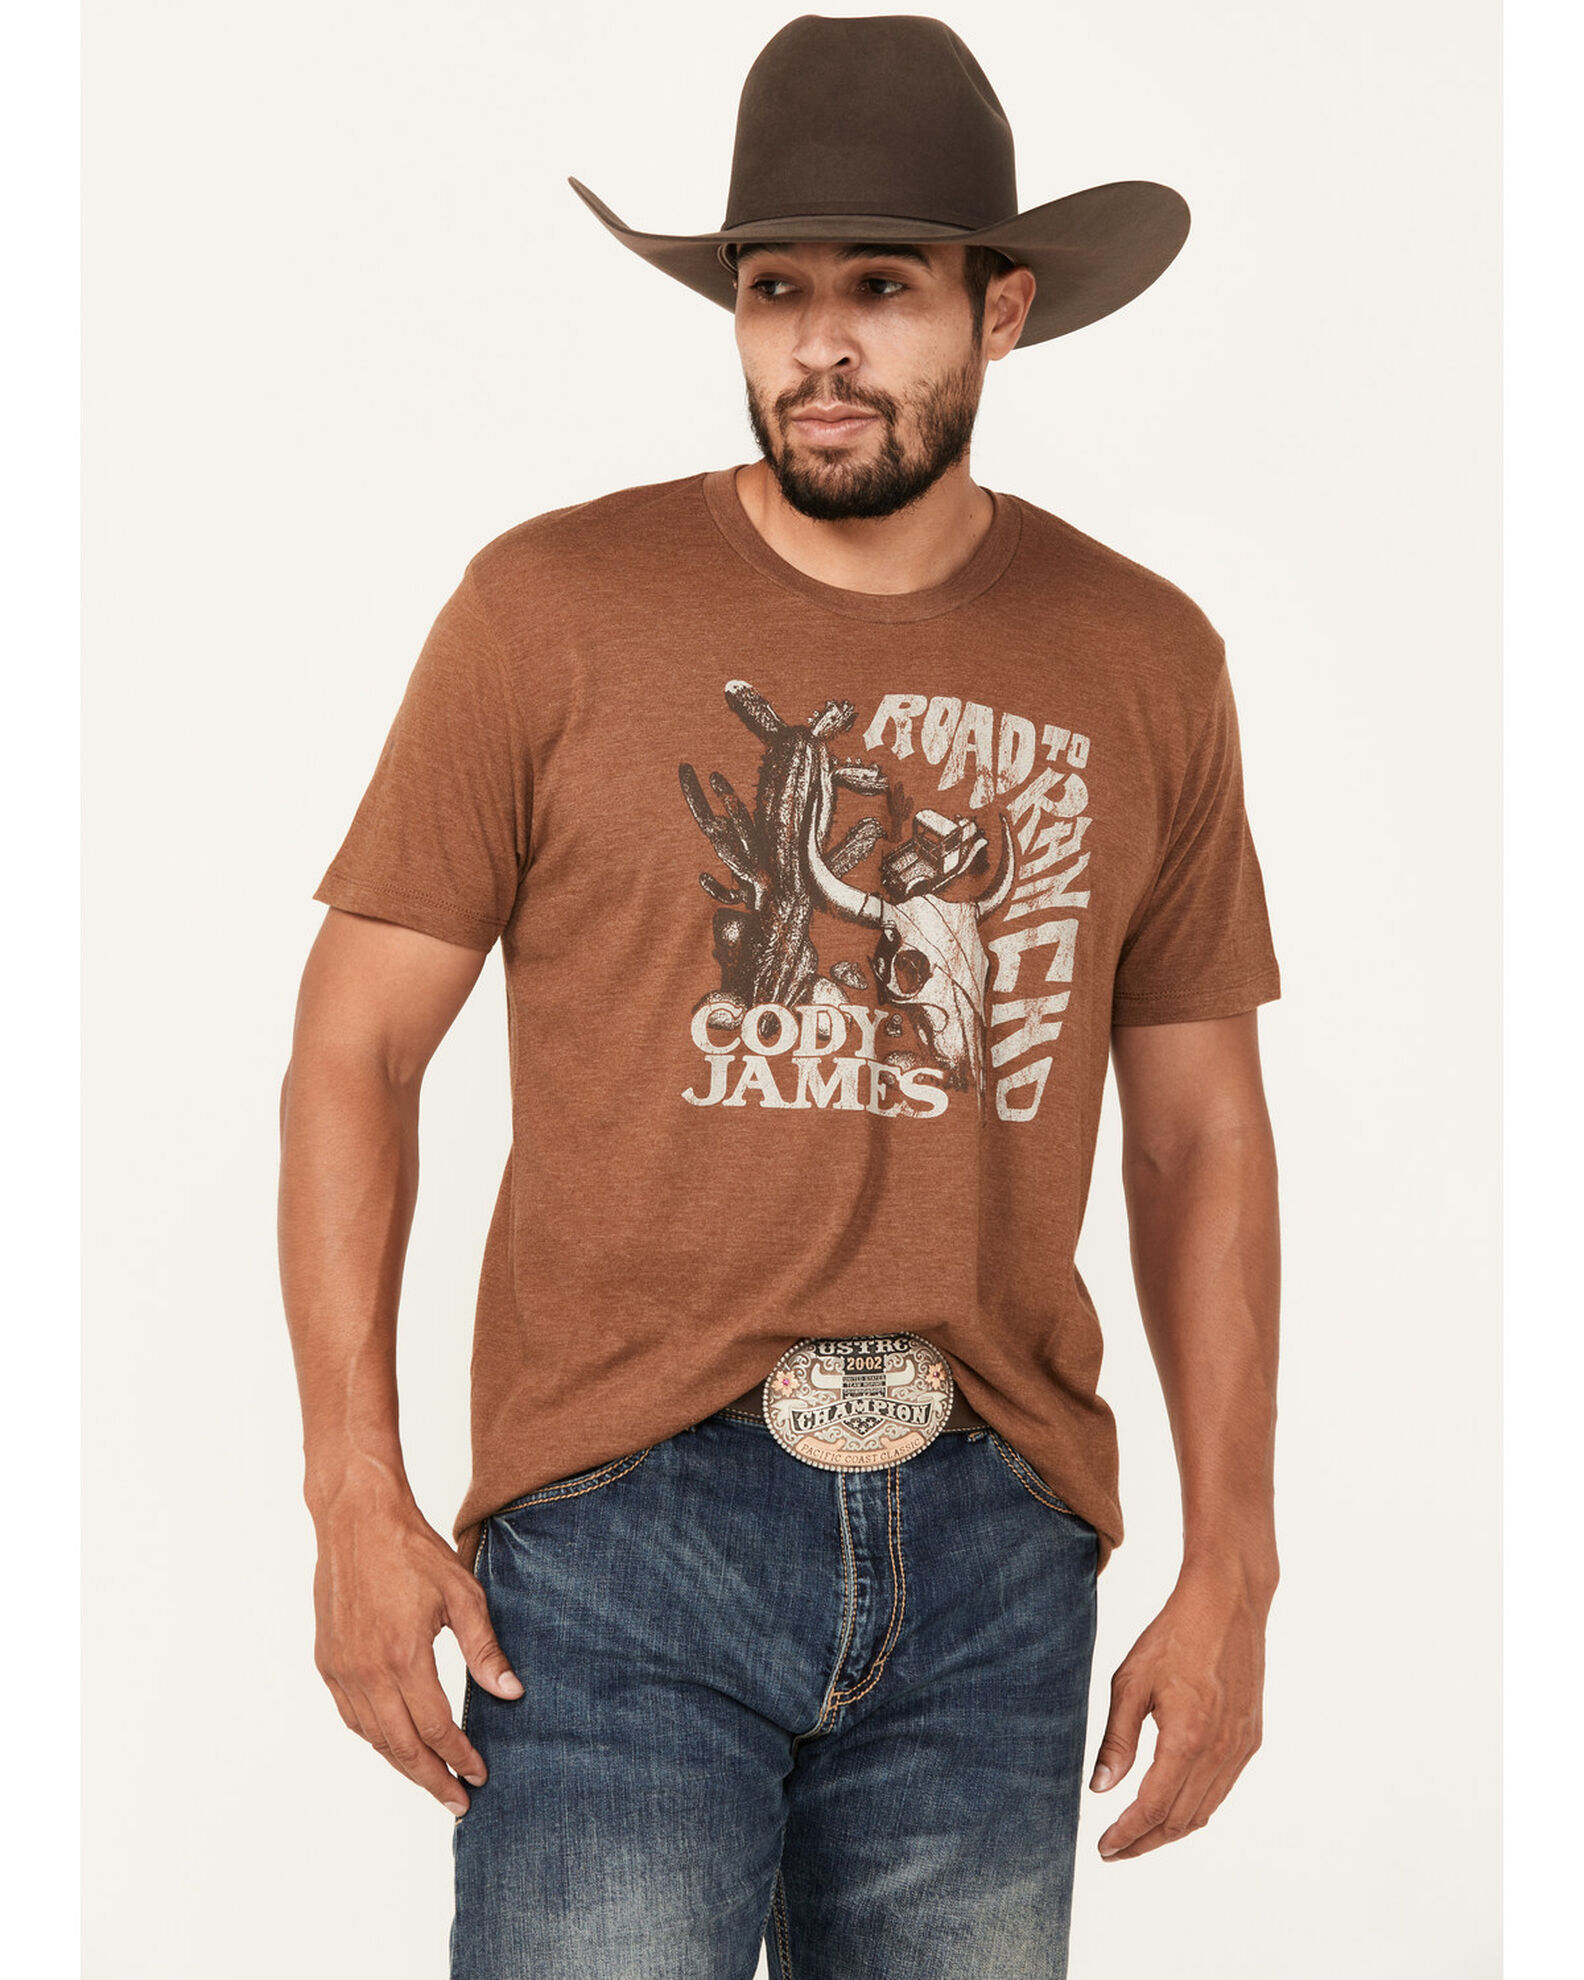 Cody James Men's Road To Rancho Short Sleeve Graphic T-Shirt